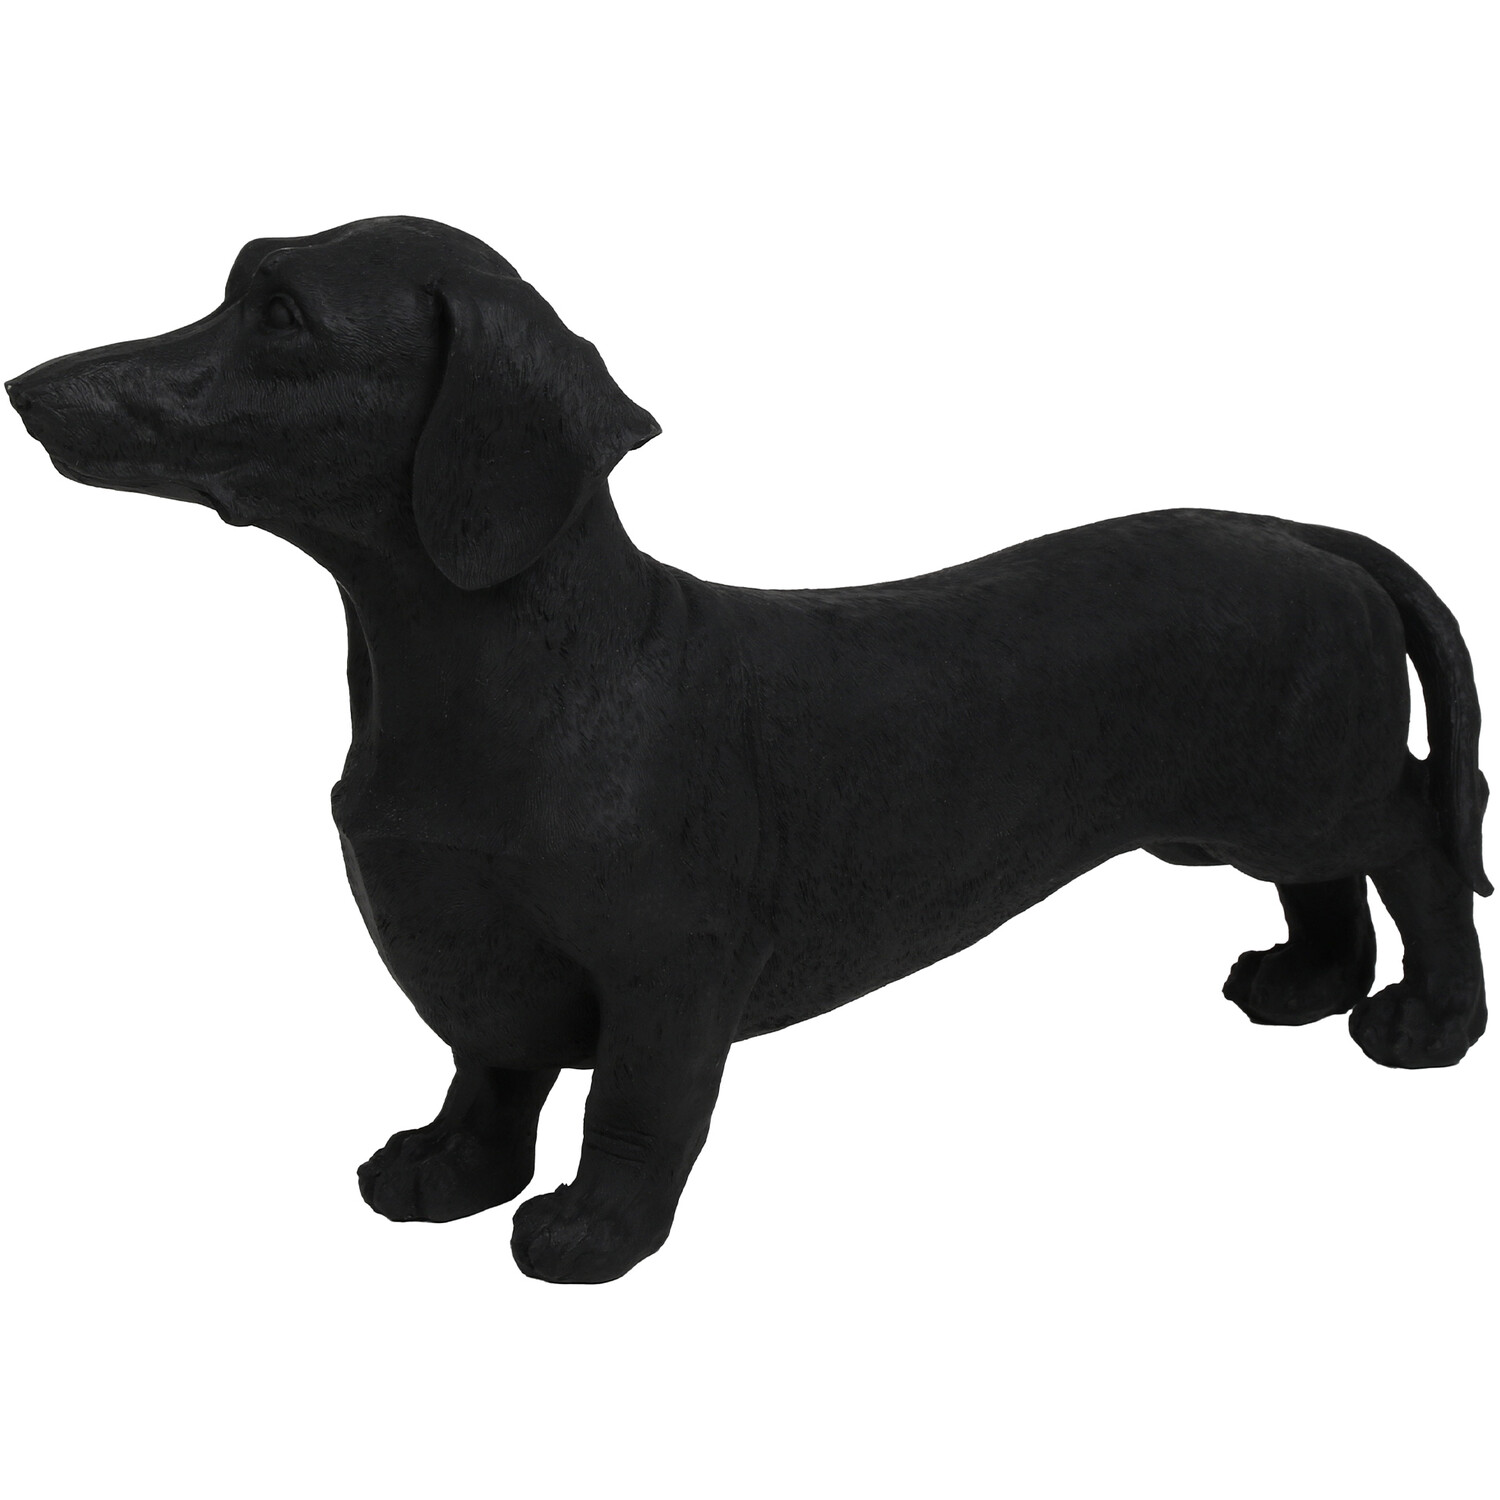 Black Sausage Dog Ornament Image 2